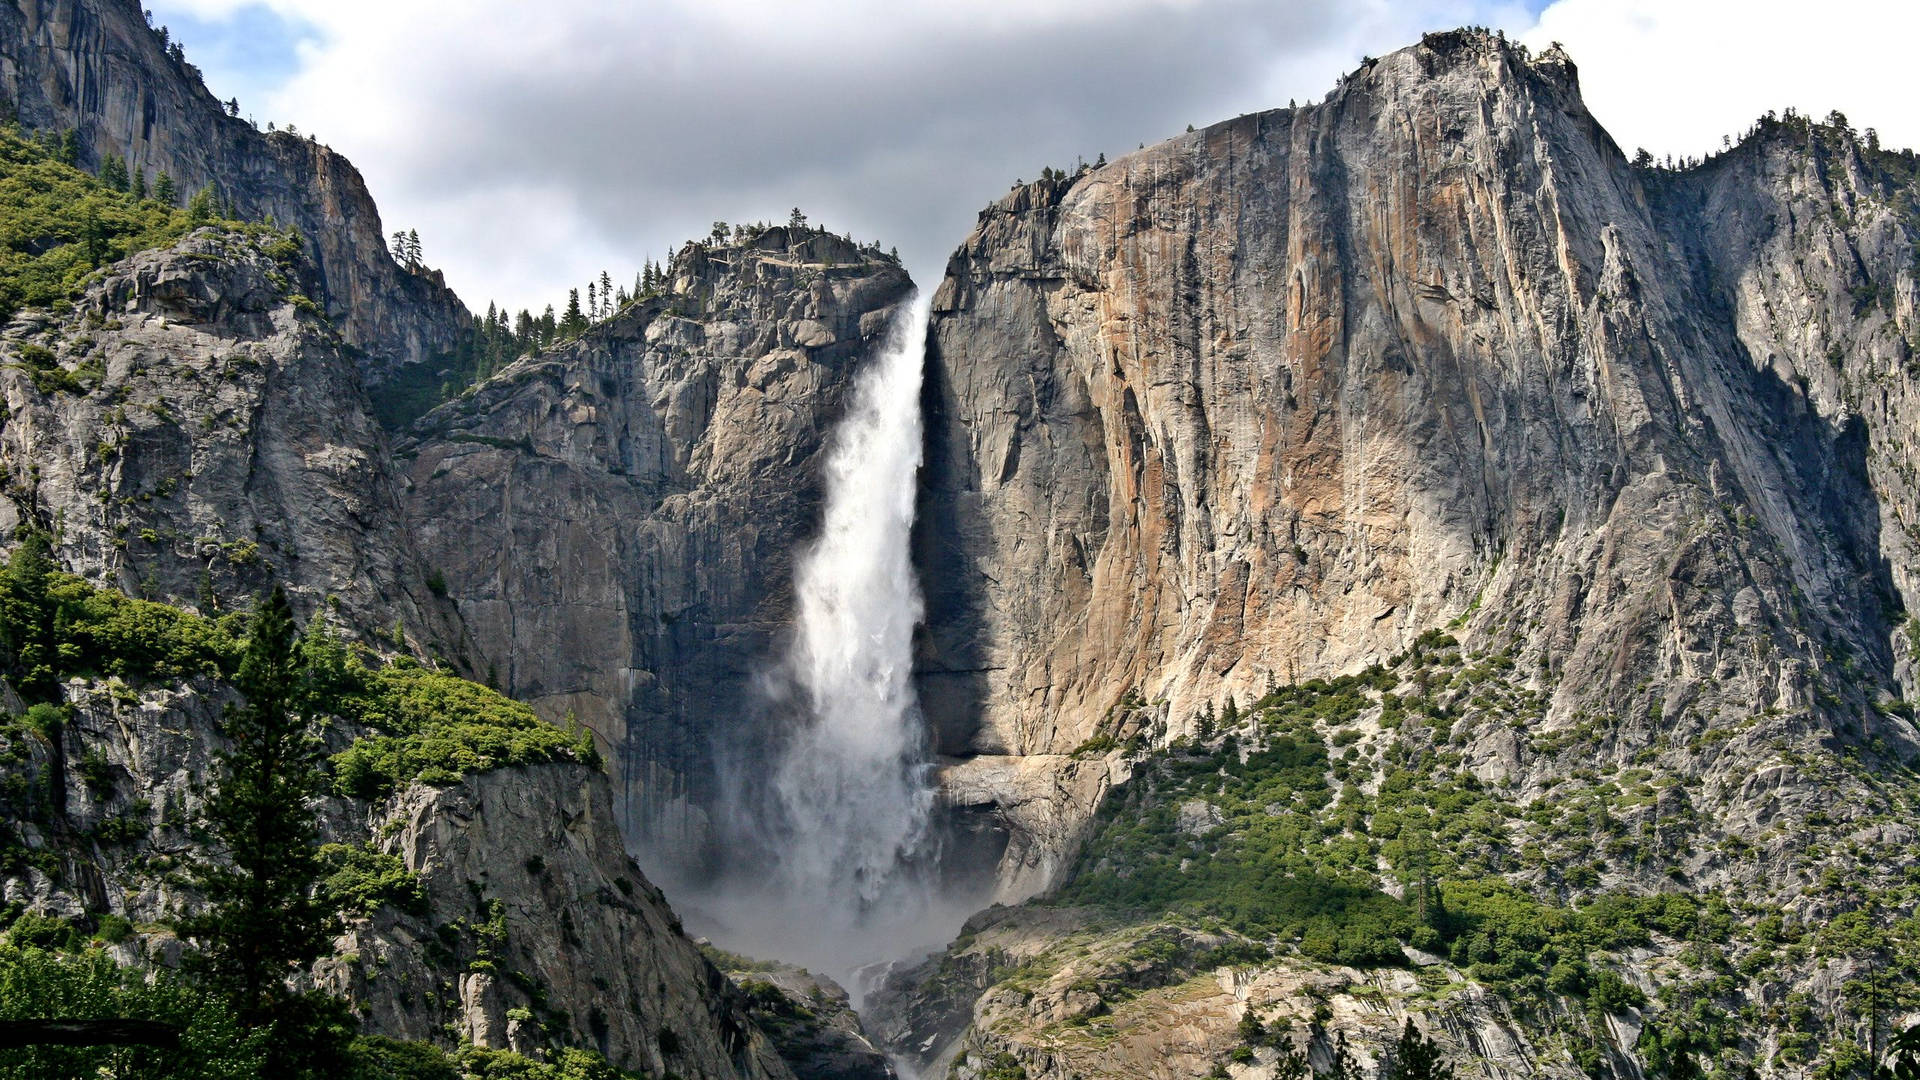 Yosemite 2560X1440 Wallpaper and Background Image